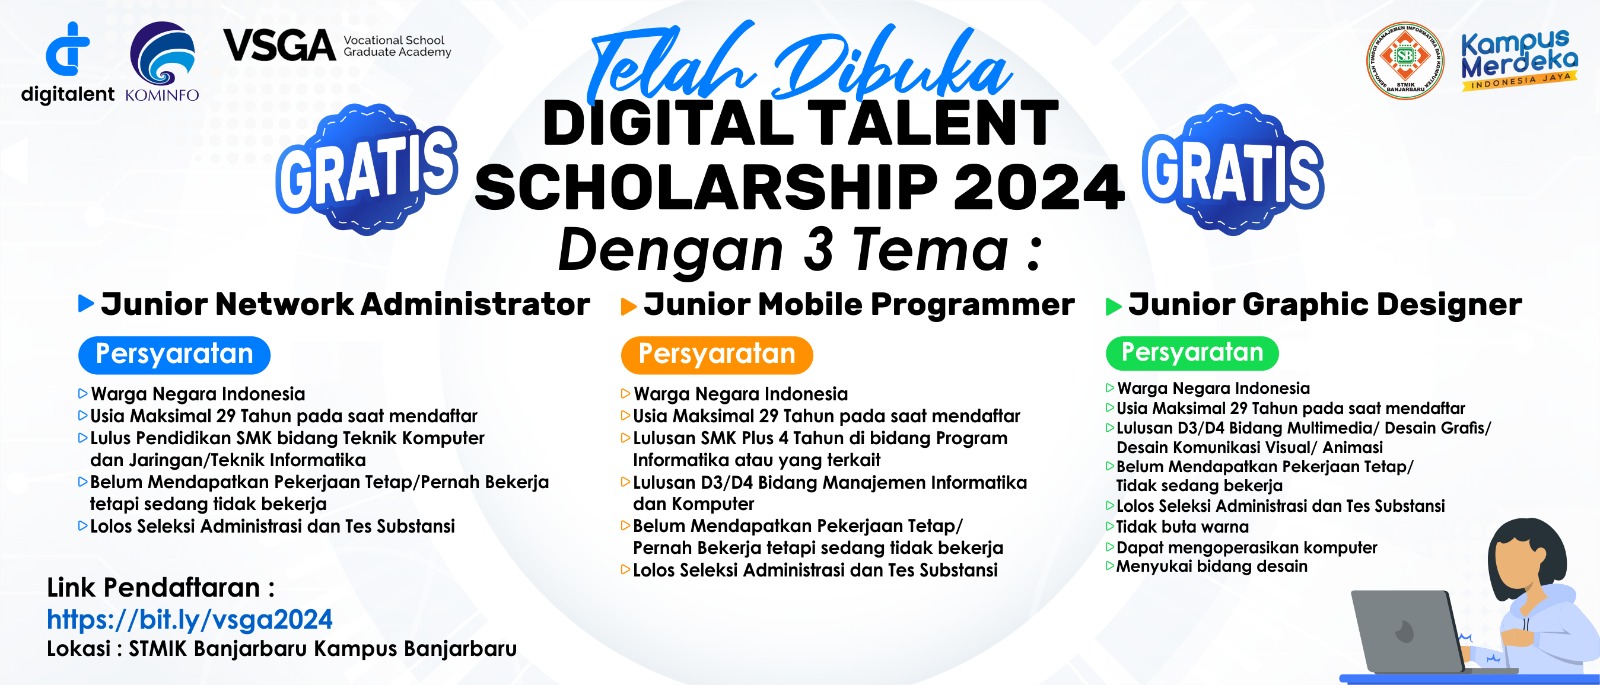 Digital Talent Scholarship 2024